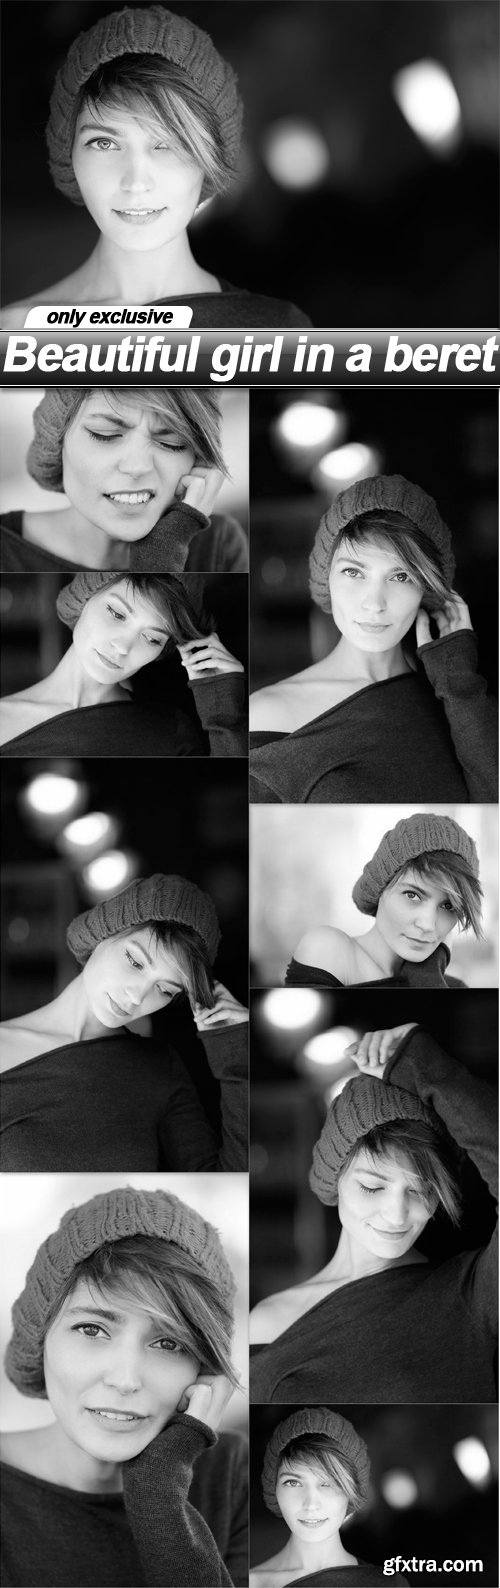 Beautiful girl in a beret - 8 UHQ JPEG